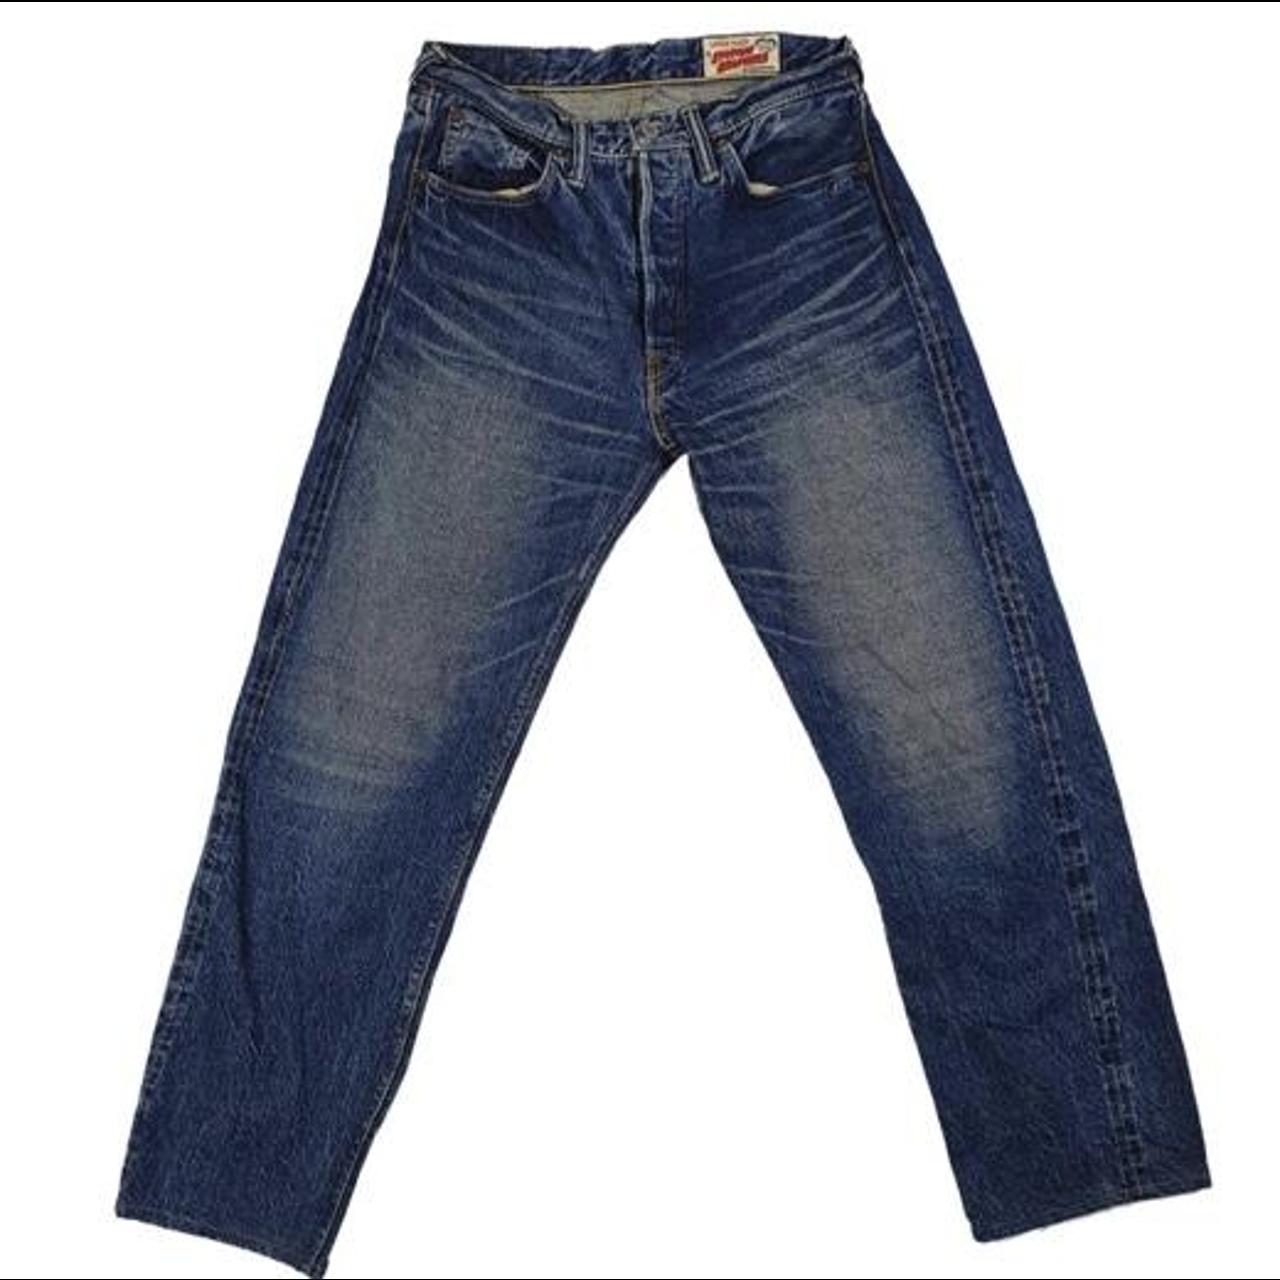 Evisu Men's Jeans | Depop